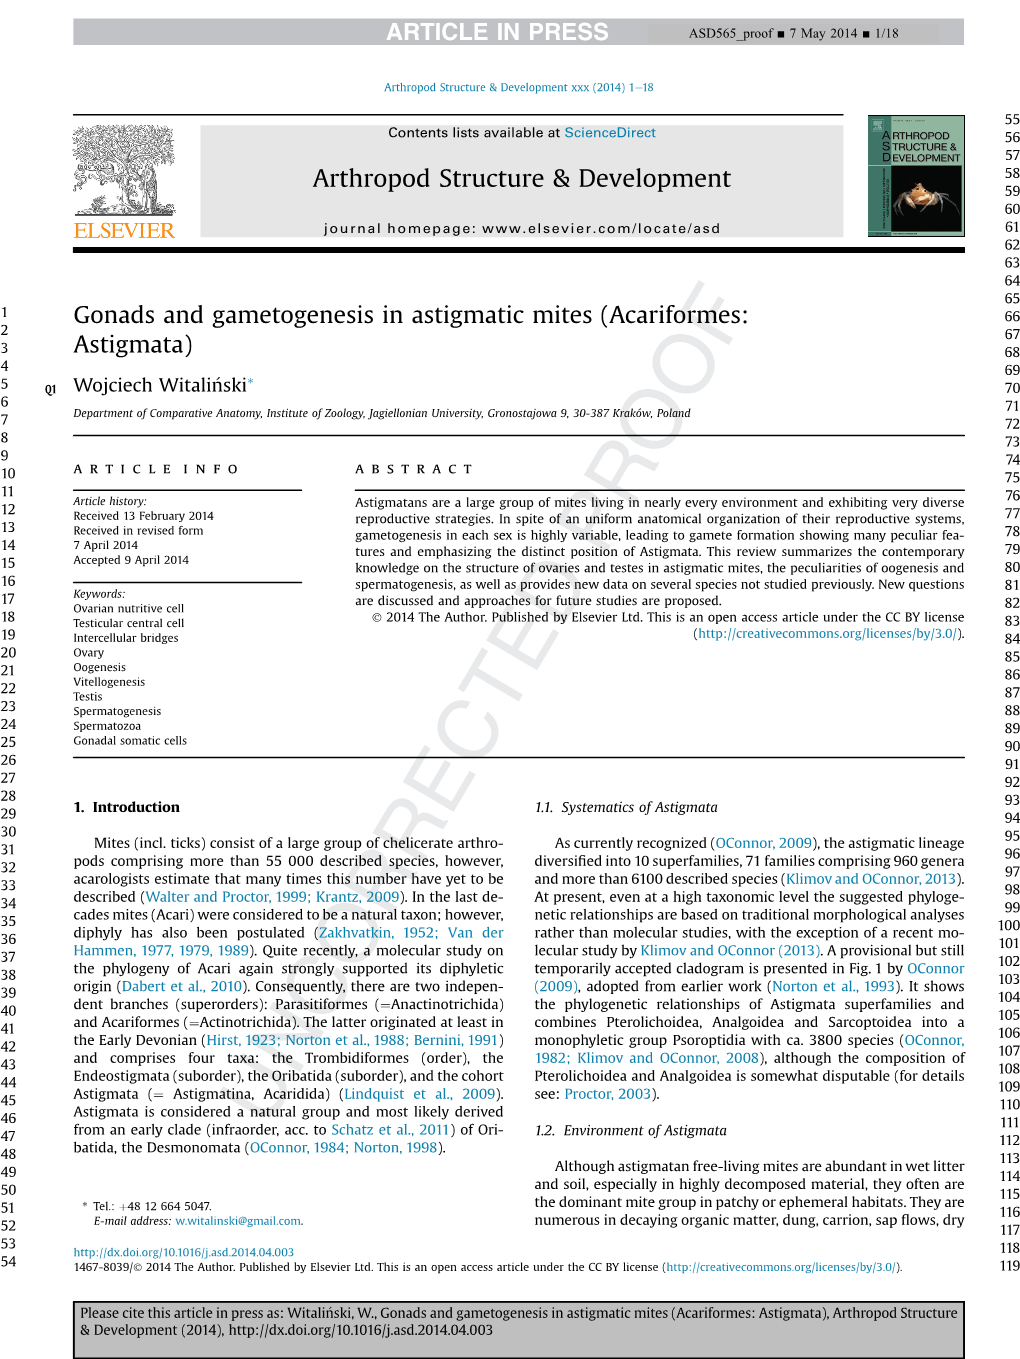 Gonads and Gametogenesis in Astigmatic Mites